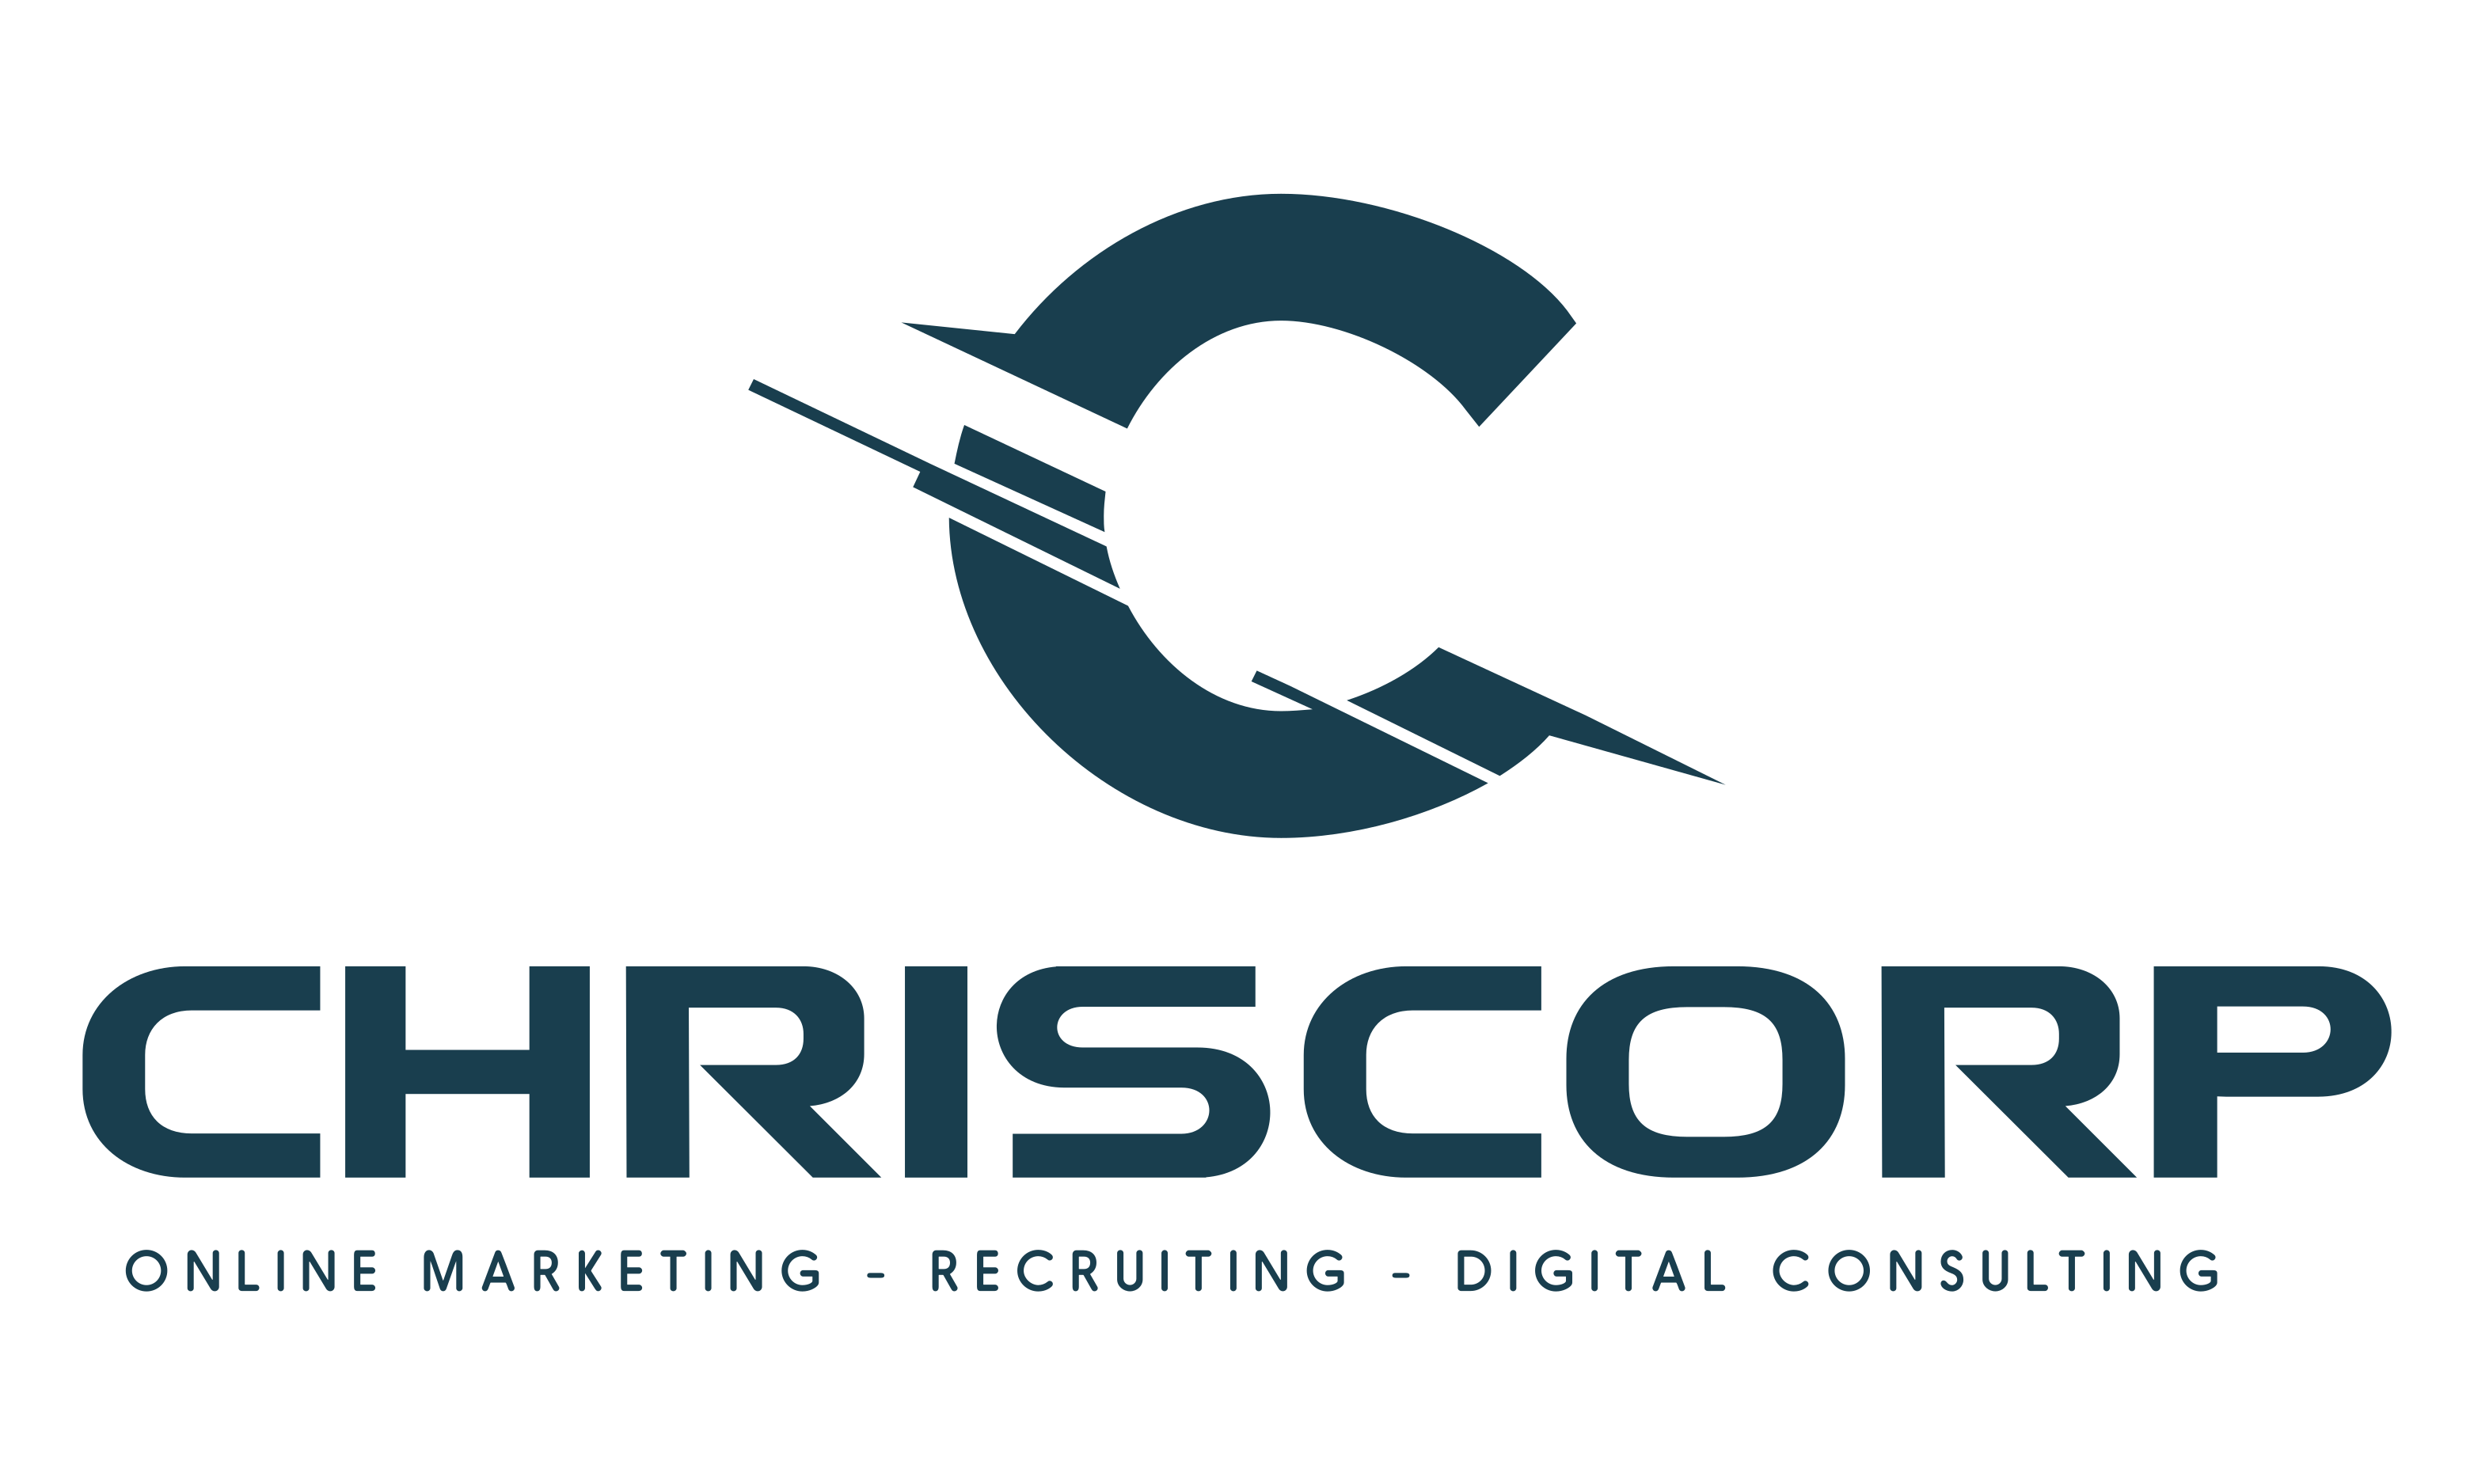 #chriscorp Online Marketing